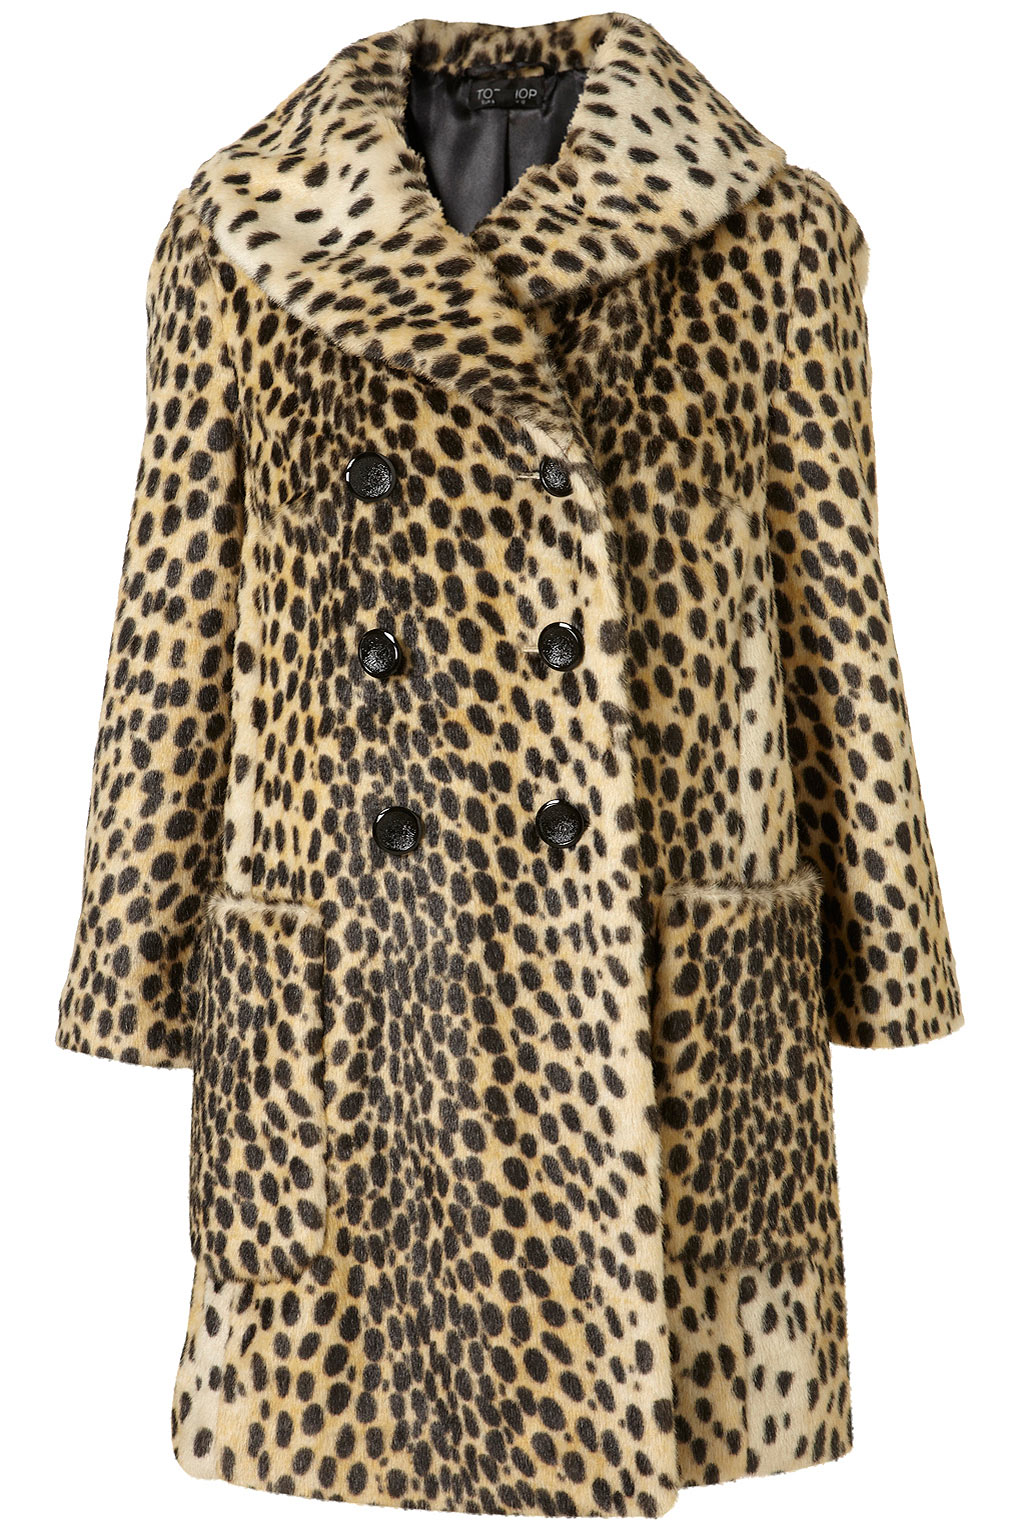 Topshop Leopard Print Vintage Faux Fur Coat in Animal (fawn) | Lyst